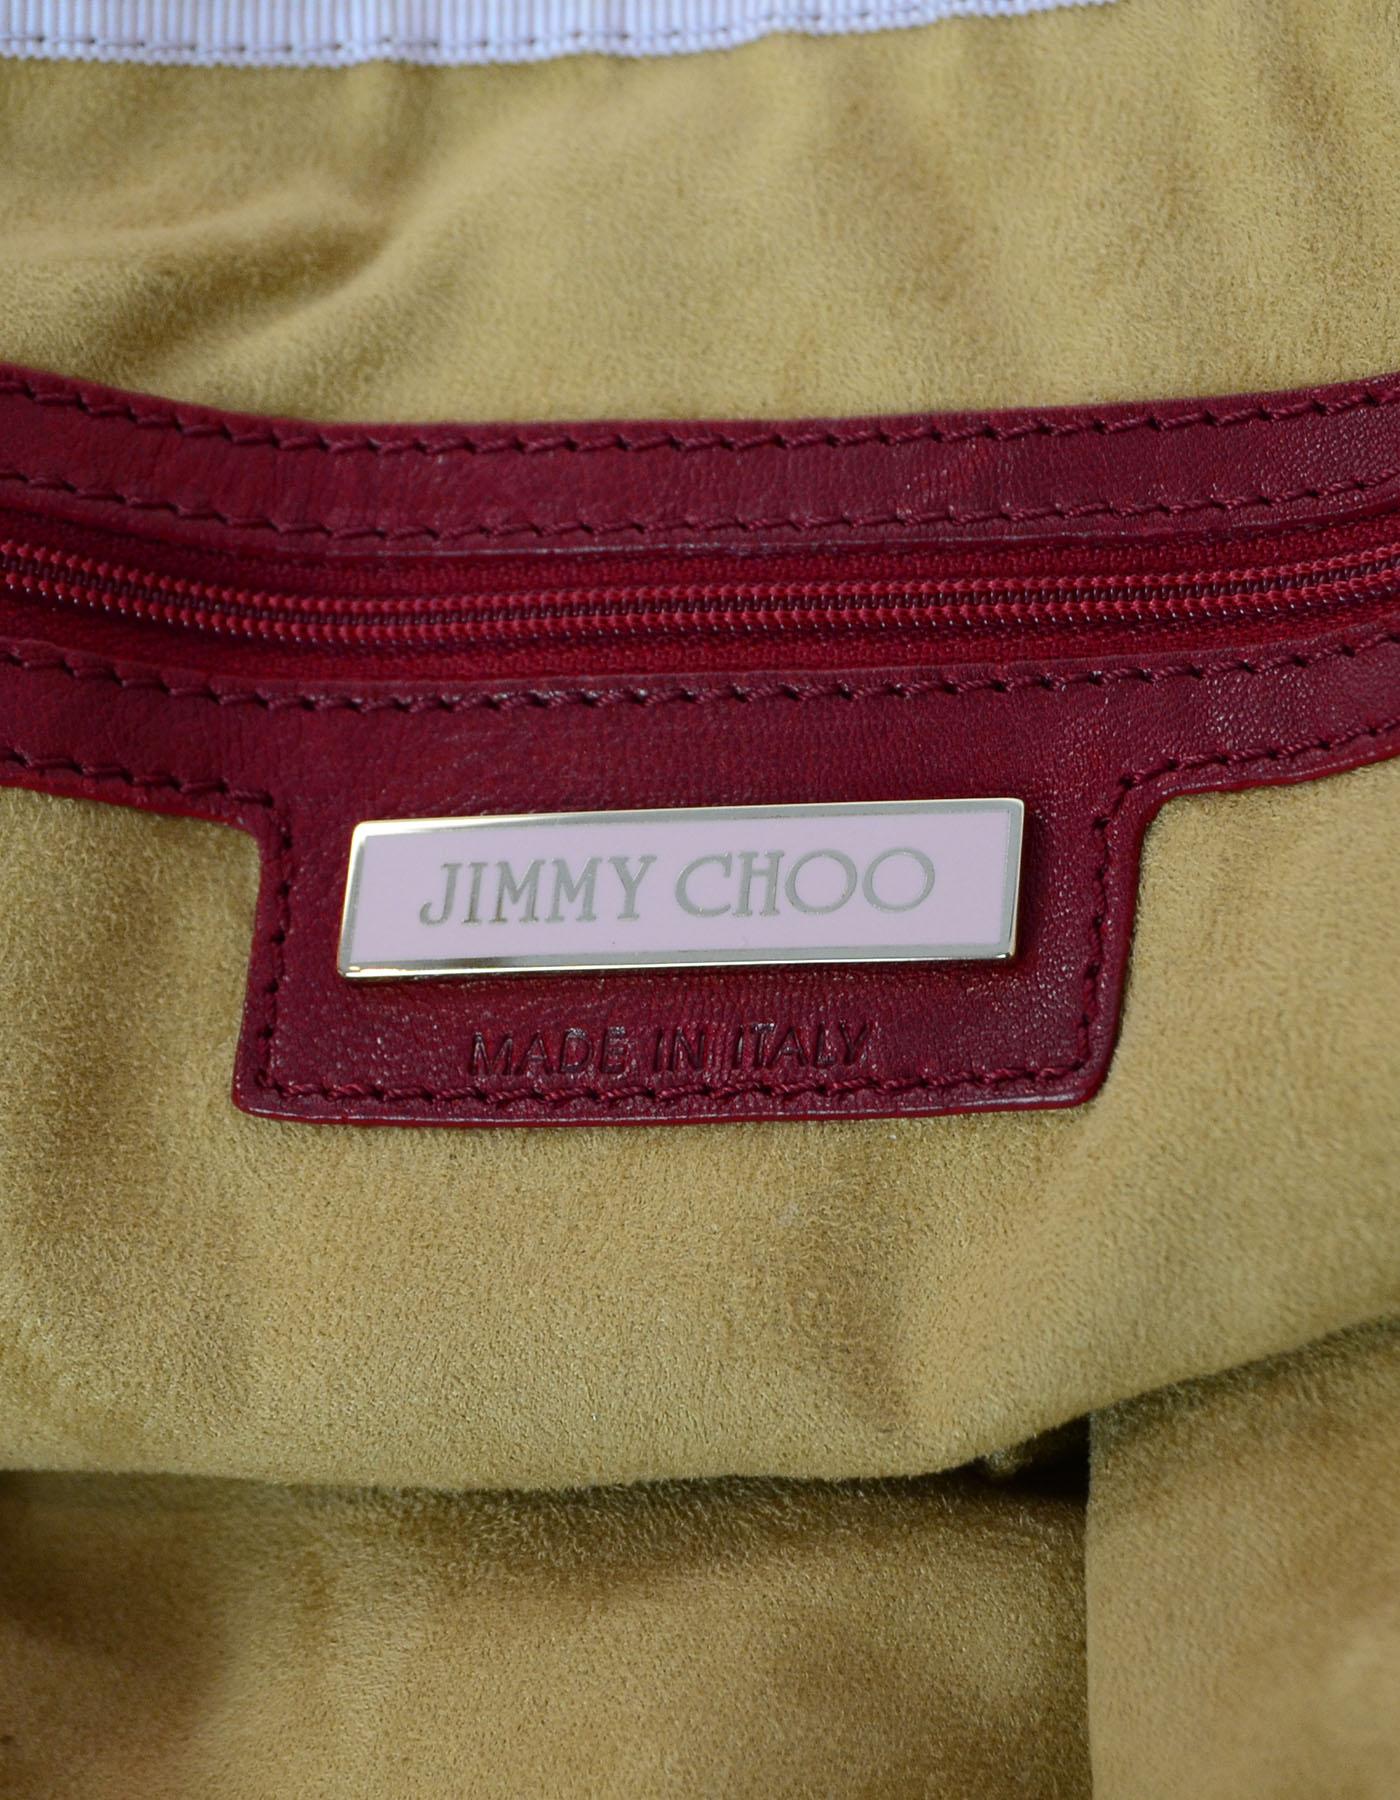 Jimmy Choo Red Snakeskin Buckle Tote Bag with Dust Bag 2